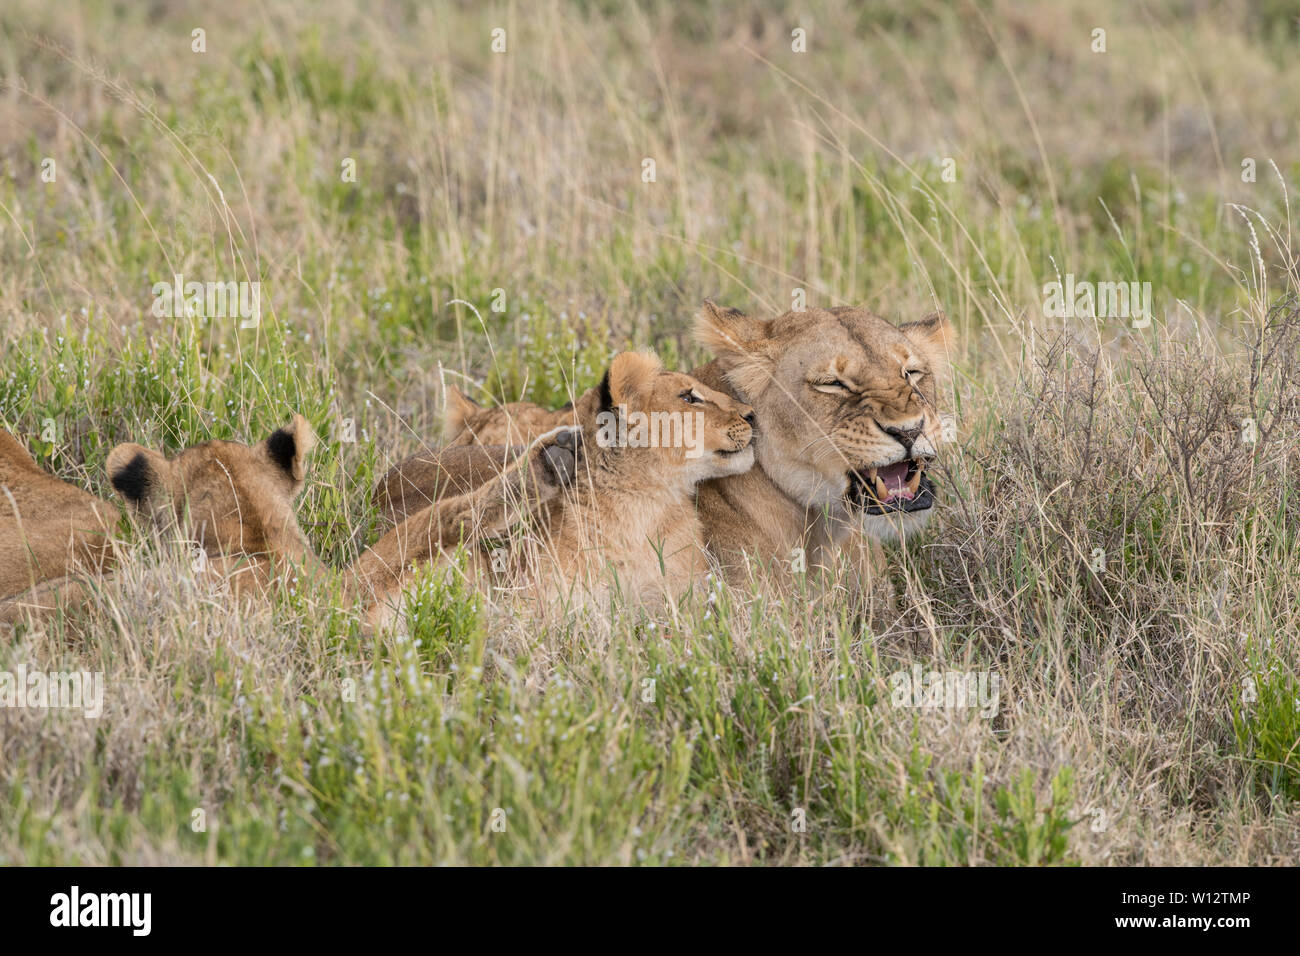 lion-cub-greeting-mom-stock-photo-alamy